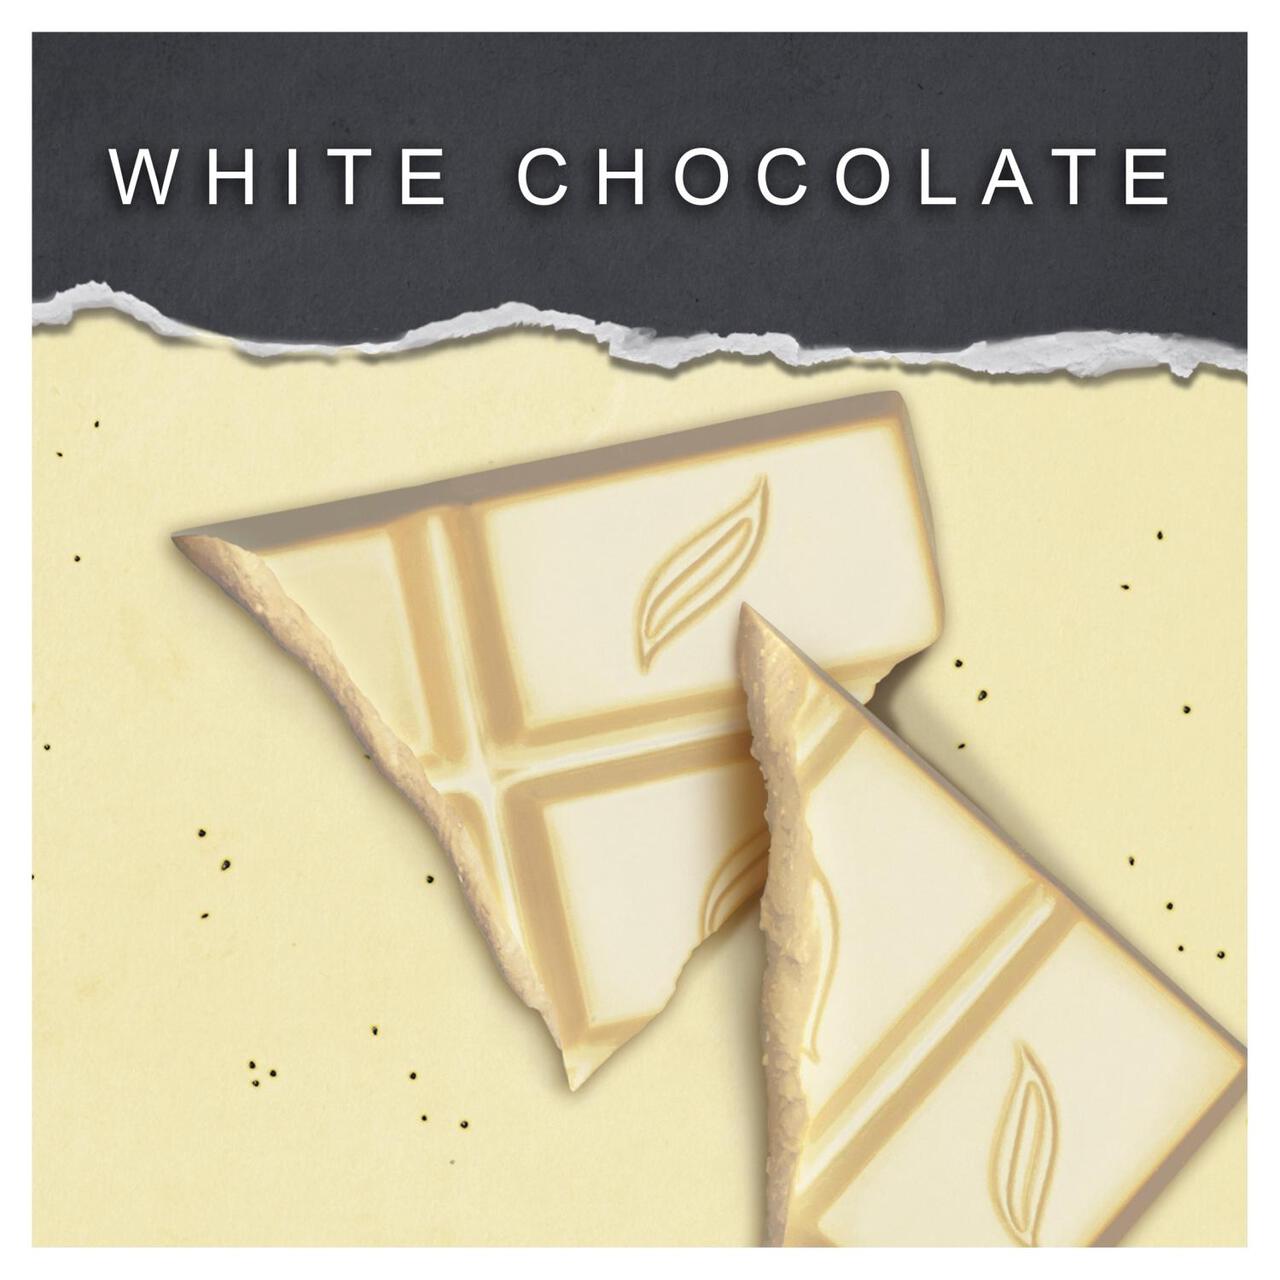 Green & Black's Organic White Chocolate Bar 90g